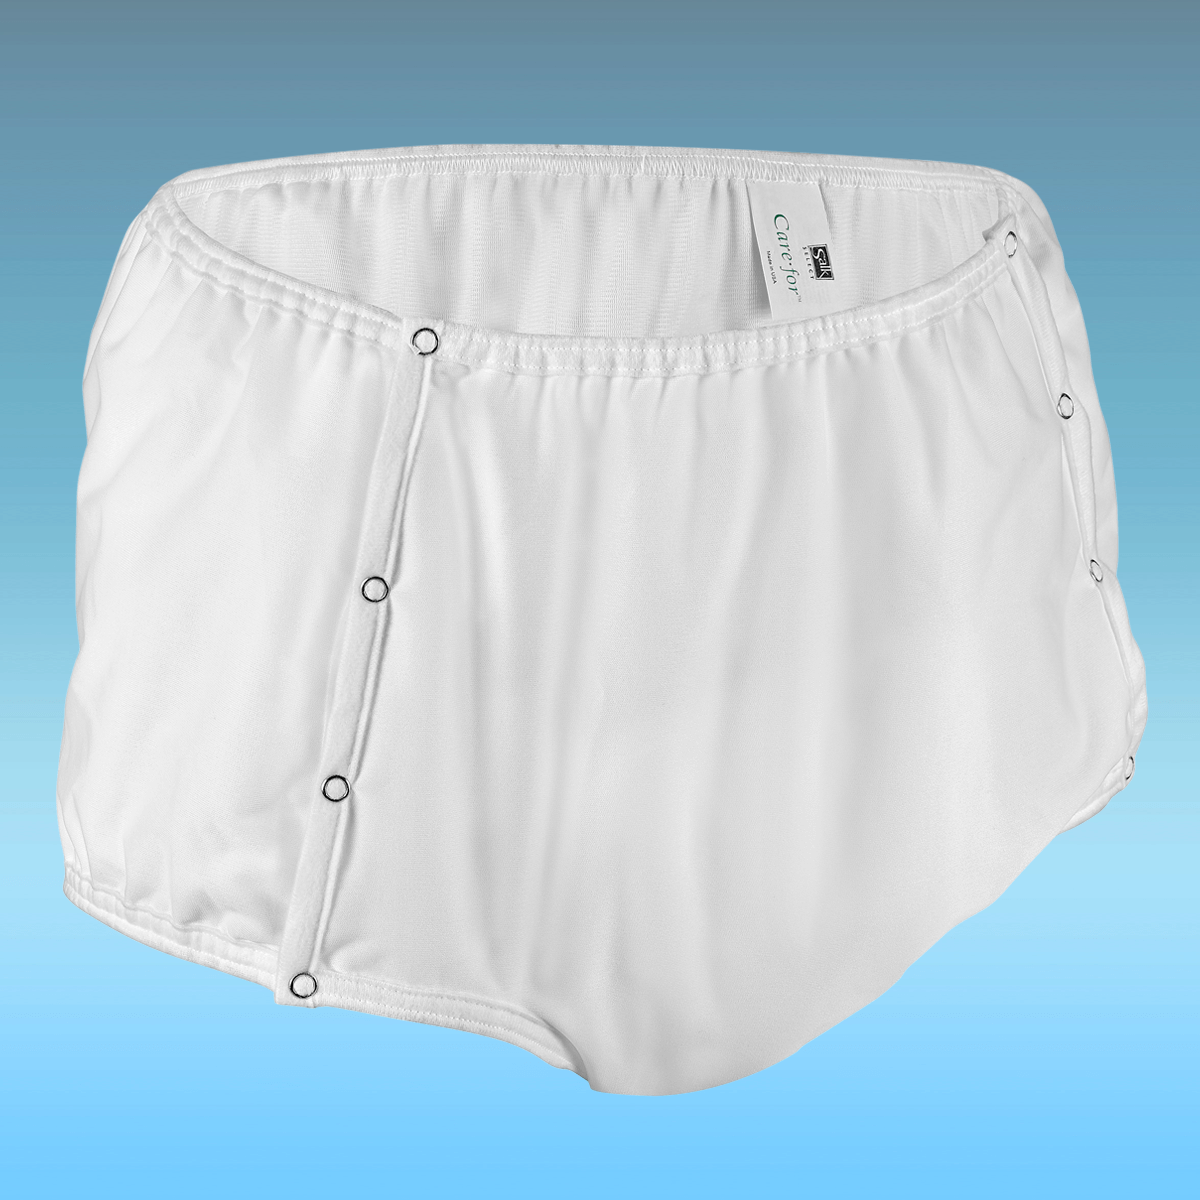 Washable Waterproof Adult Underwear Pull-on Large